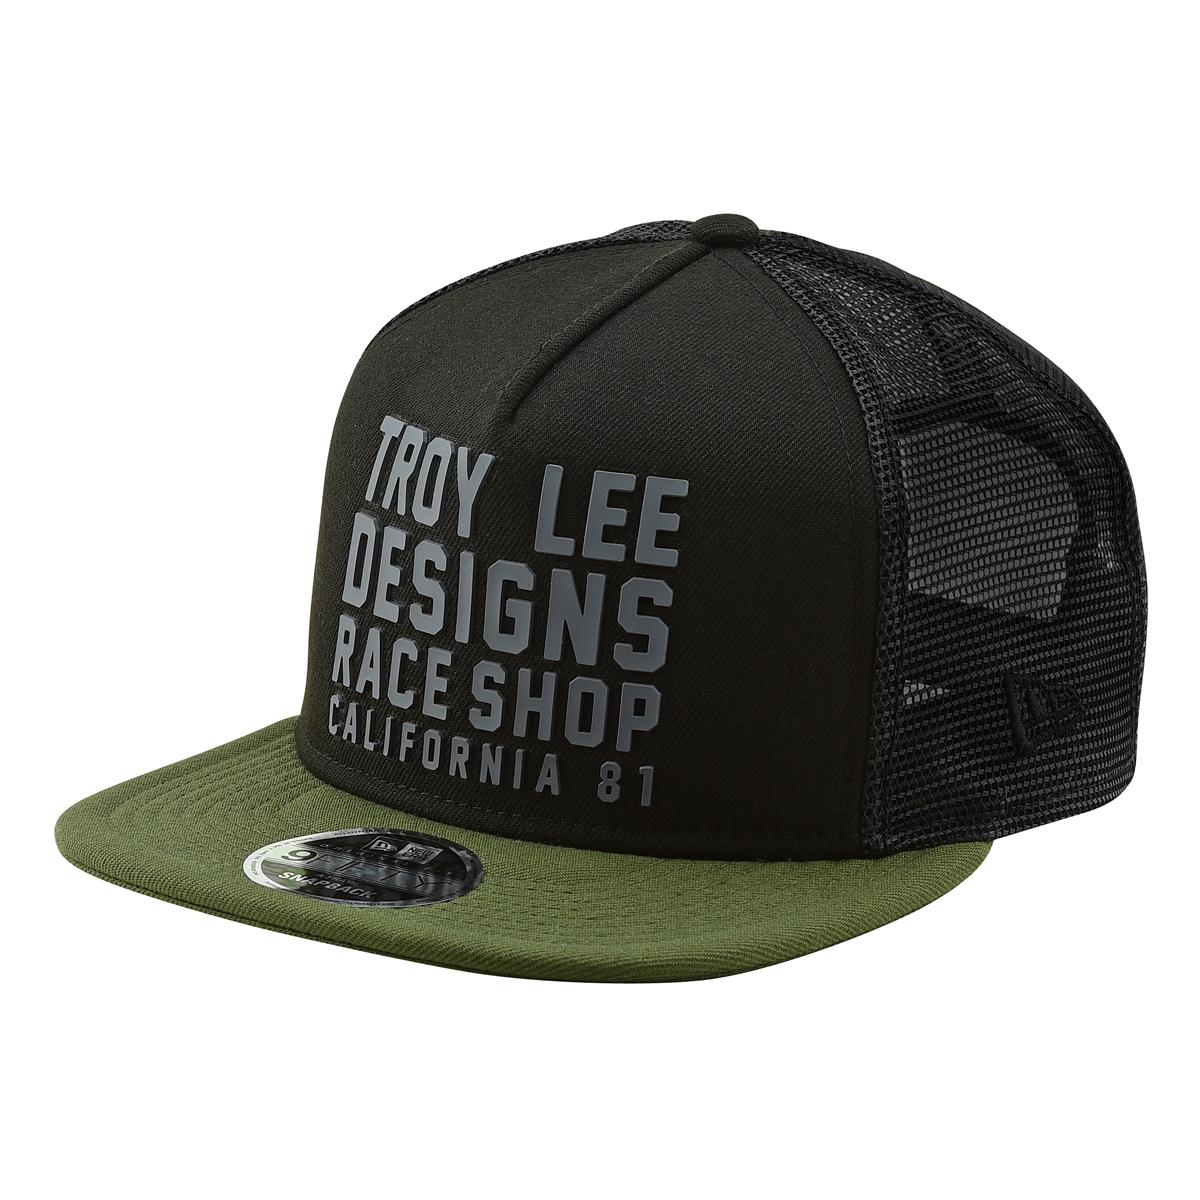 Troy Lee Designs Cappellino Snap Back RC Cali Black/Rifle Green